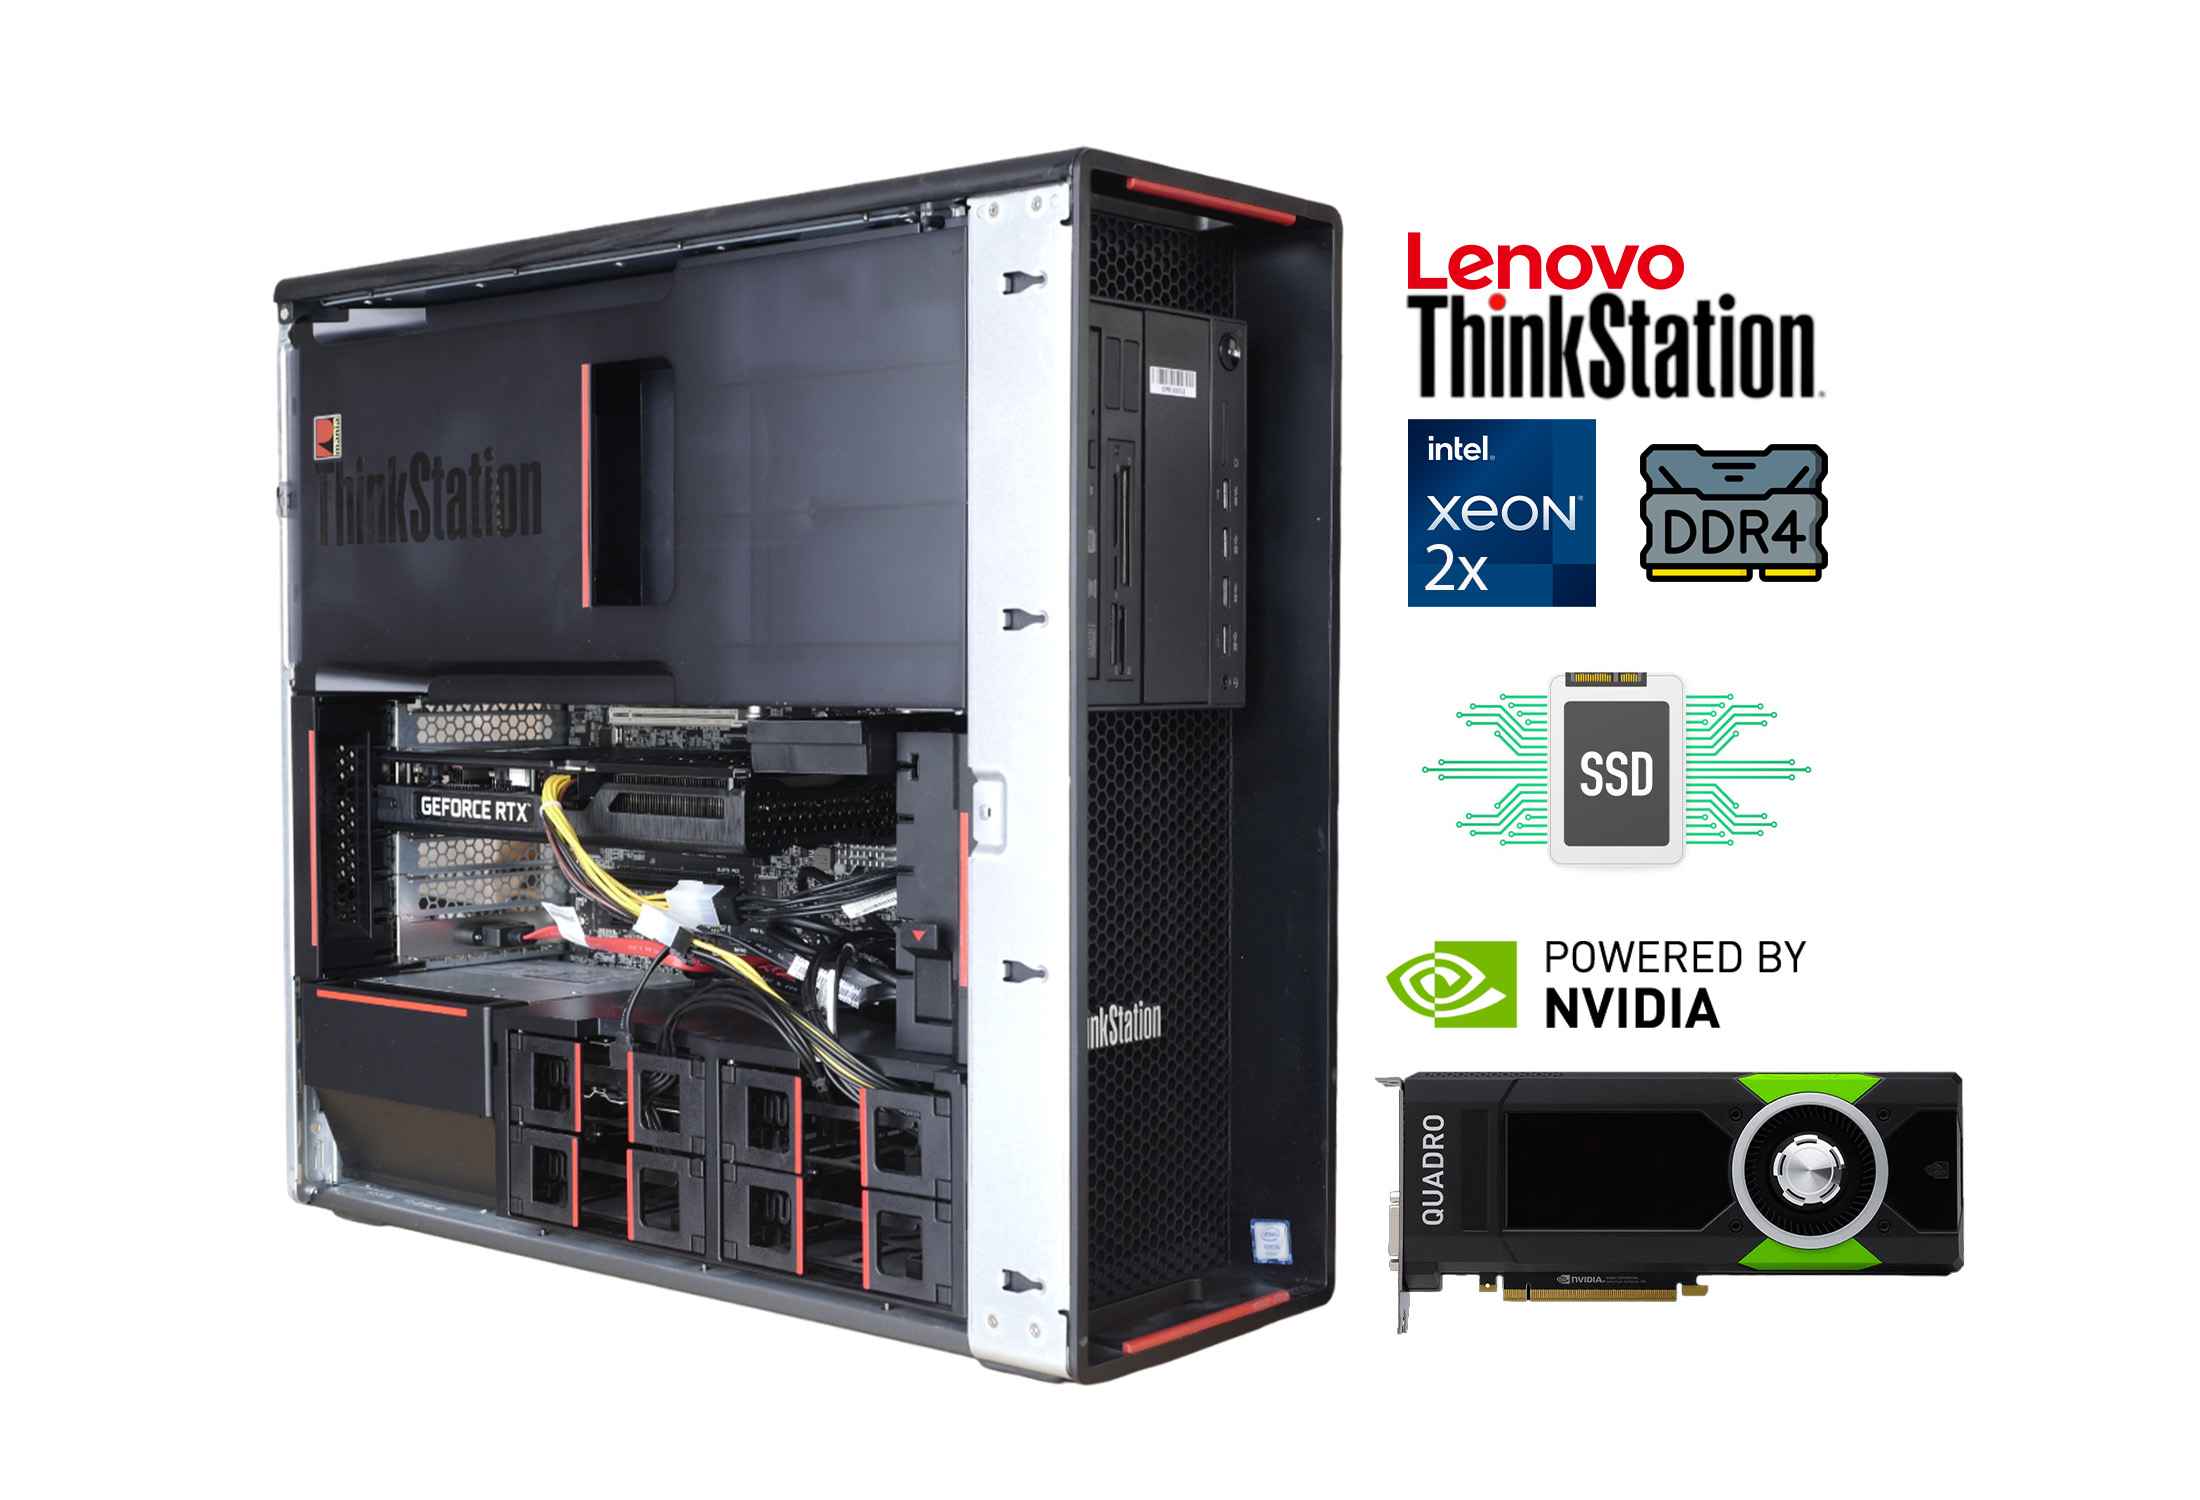 Lenovo Thinkstation P700 2x Xeon E5-2620v3 DDR4 SSD Quadro K620-GbMSY.jpeg